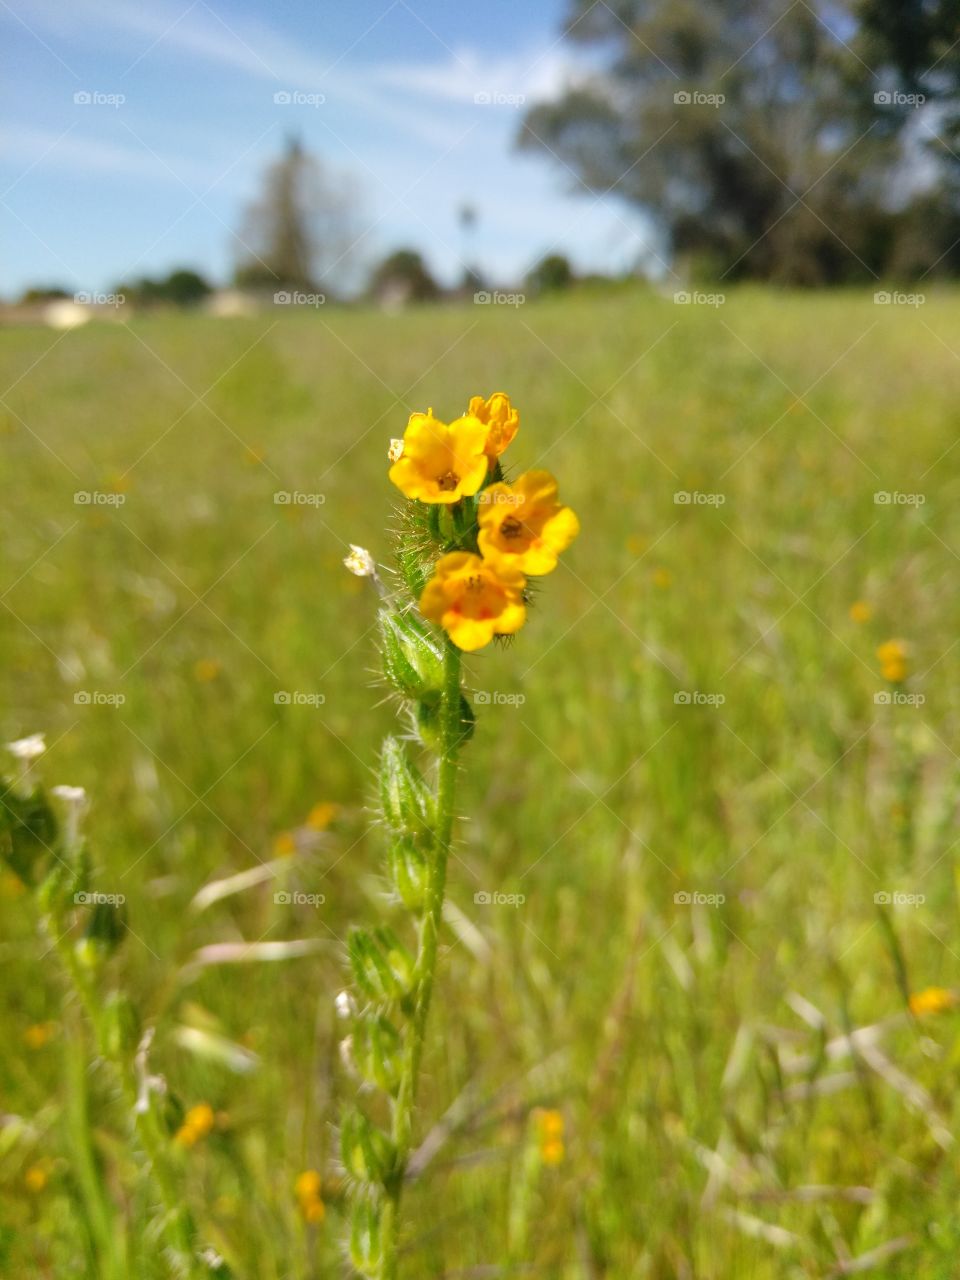 Tiny pretty flowers in a huge empty field.